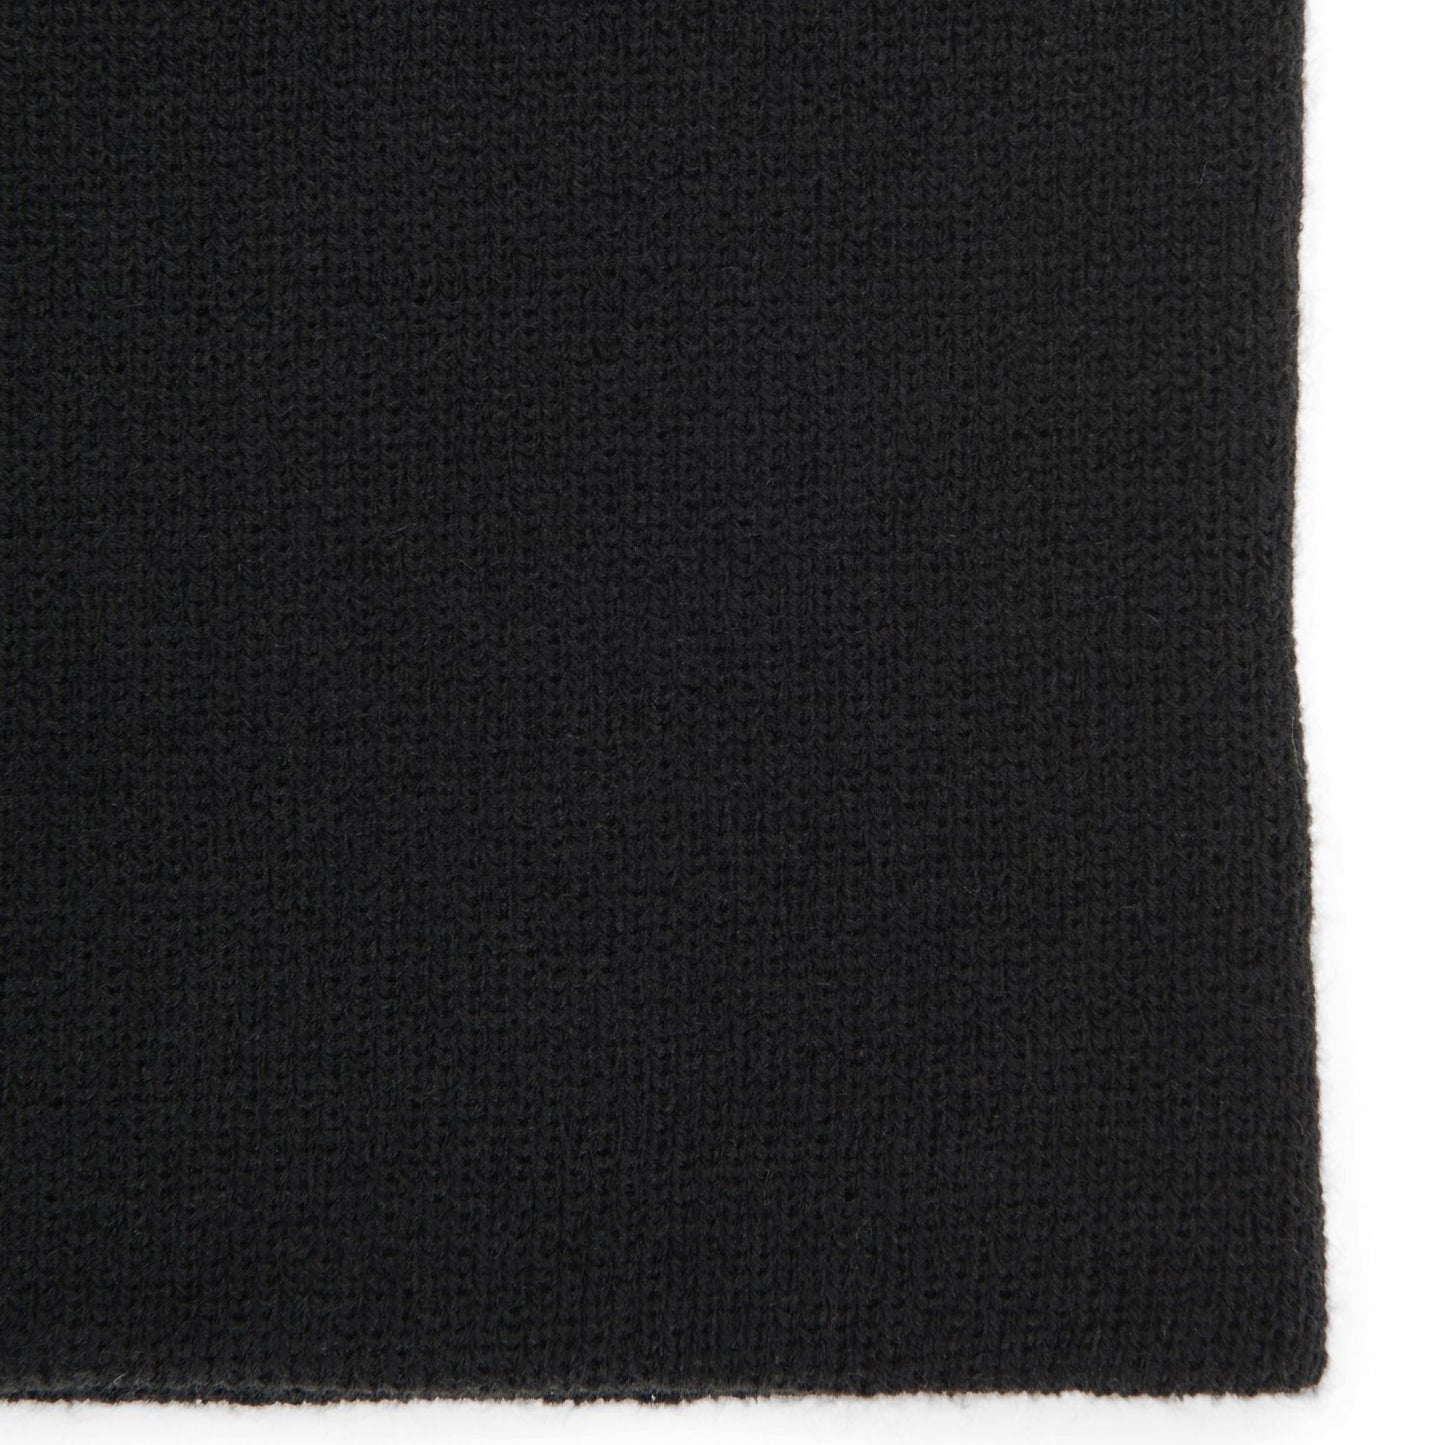 Black fabric close-up